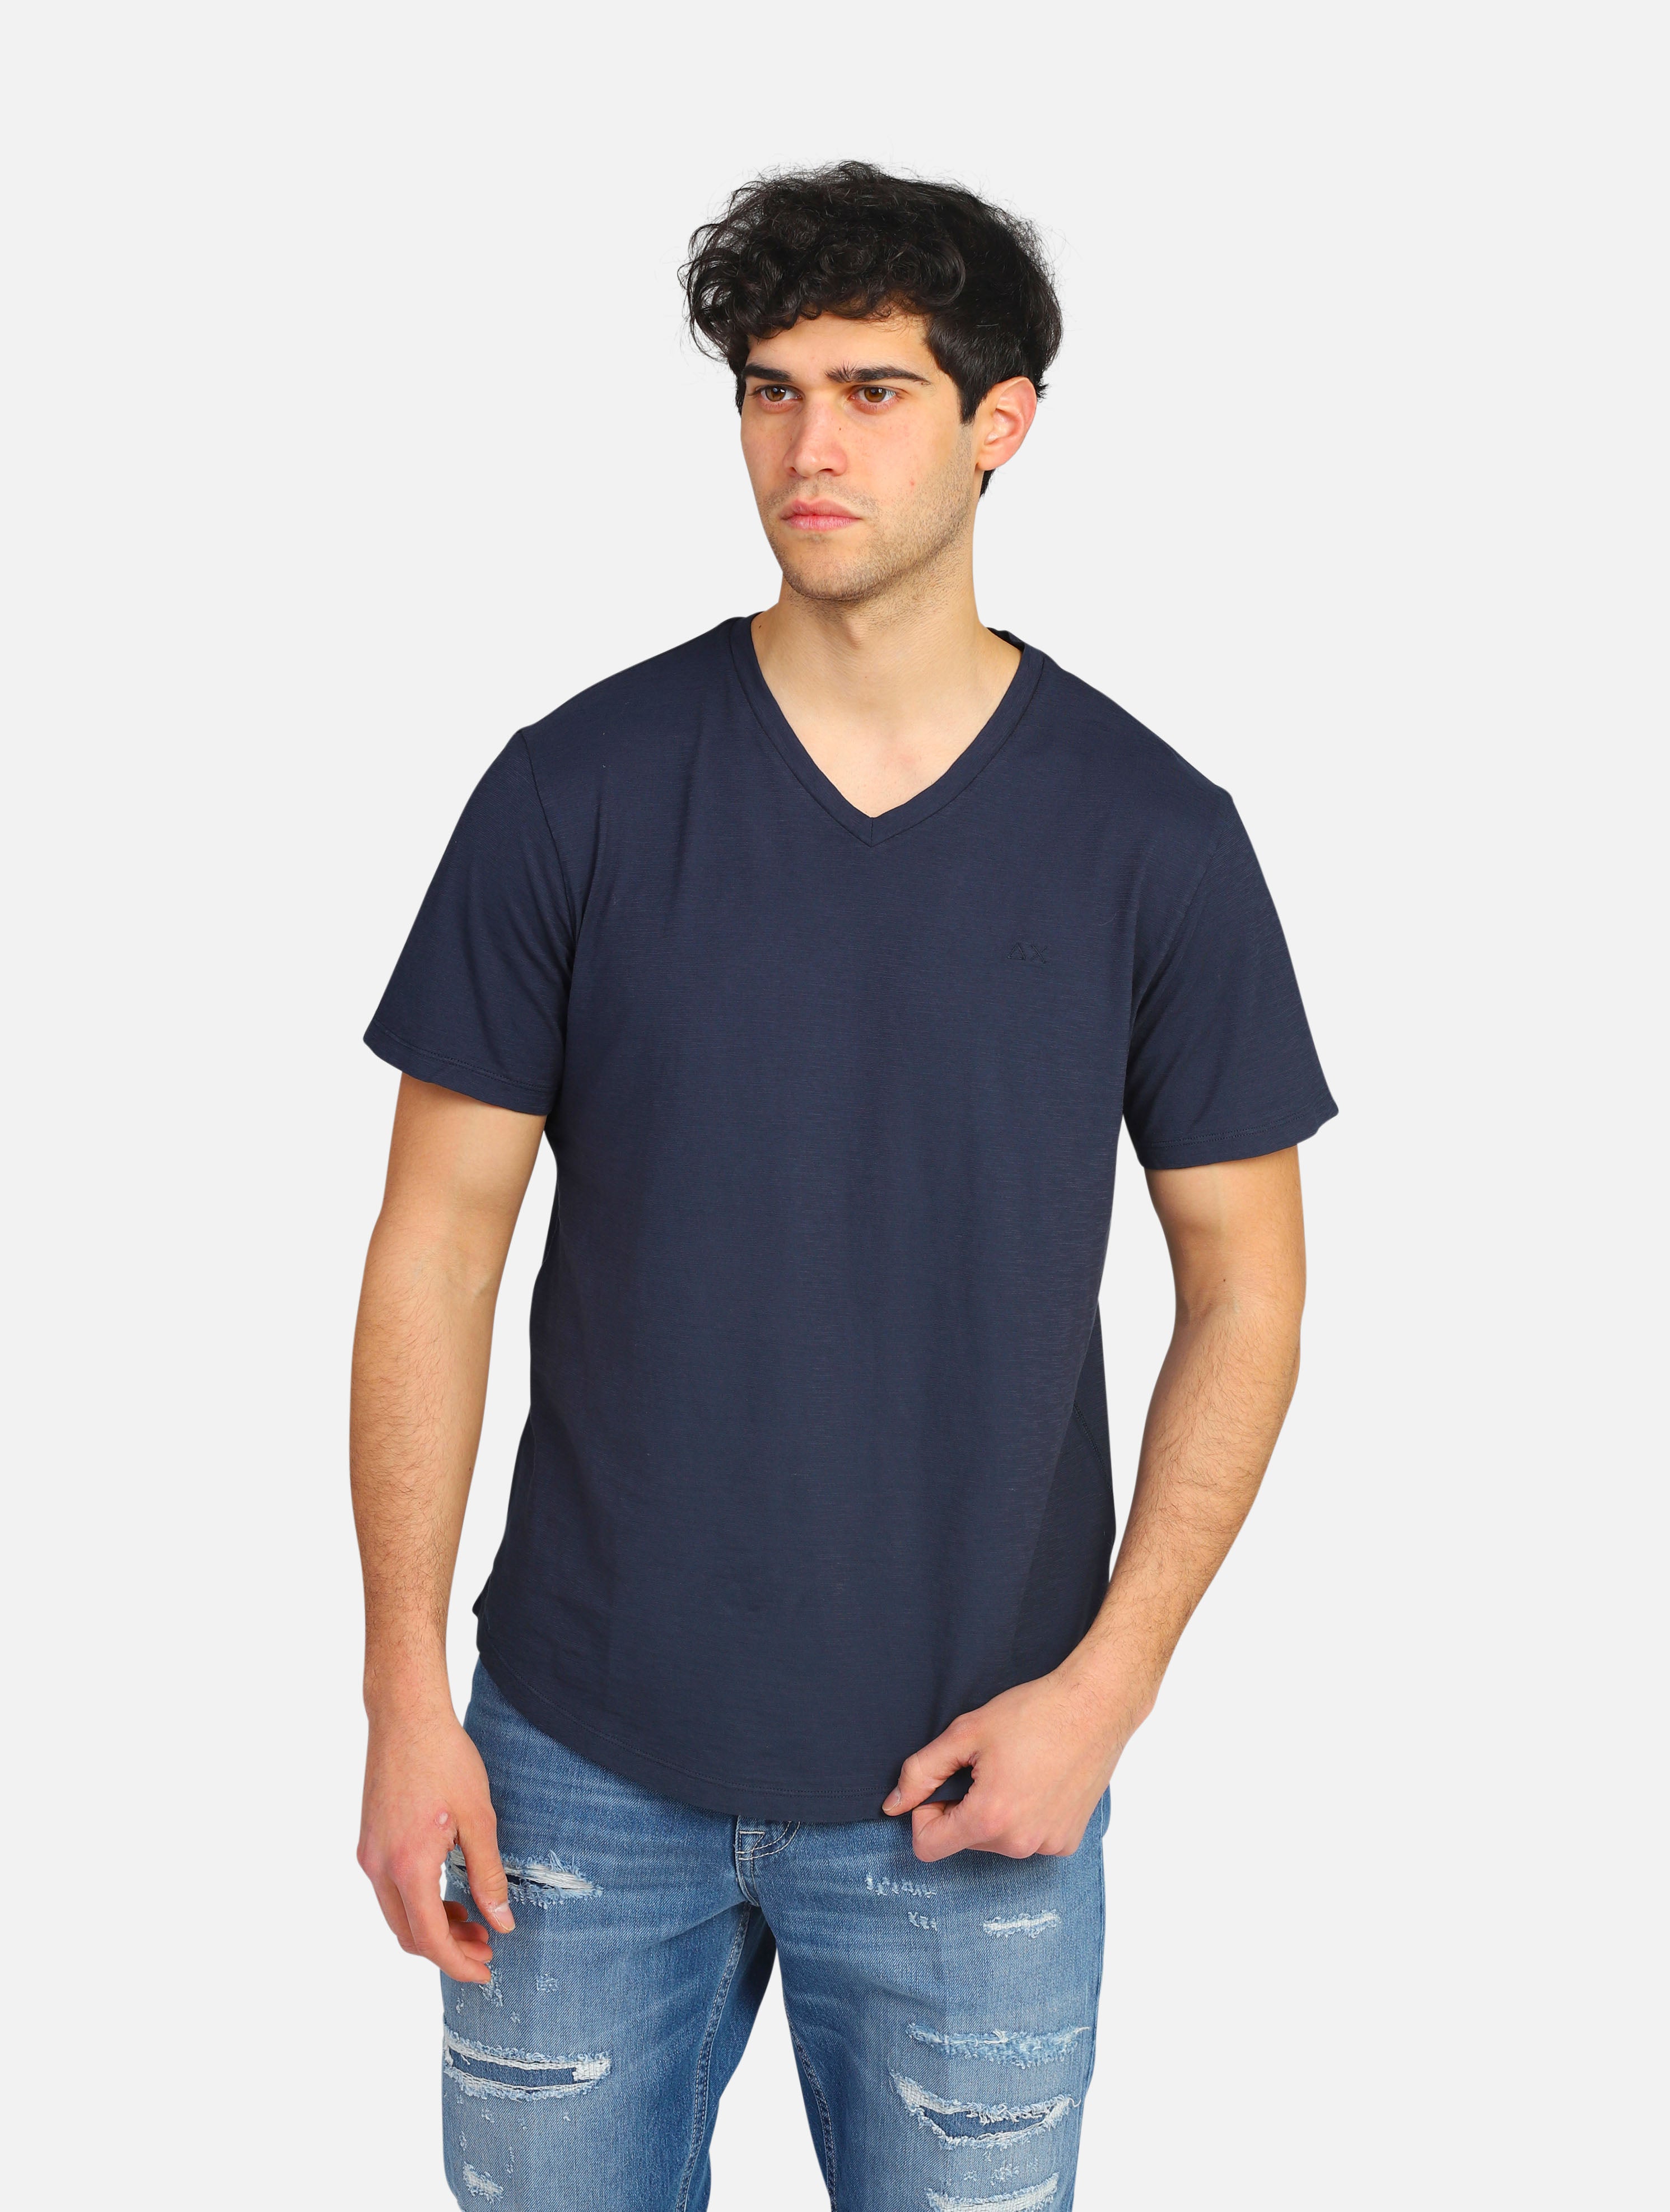 T-shirt sun68i -  navy blue uomo  - 1